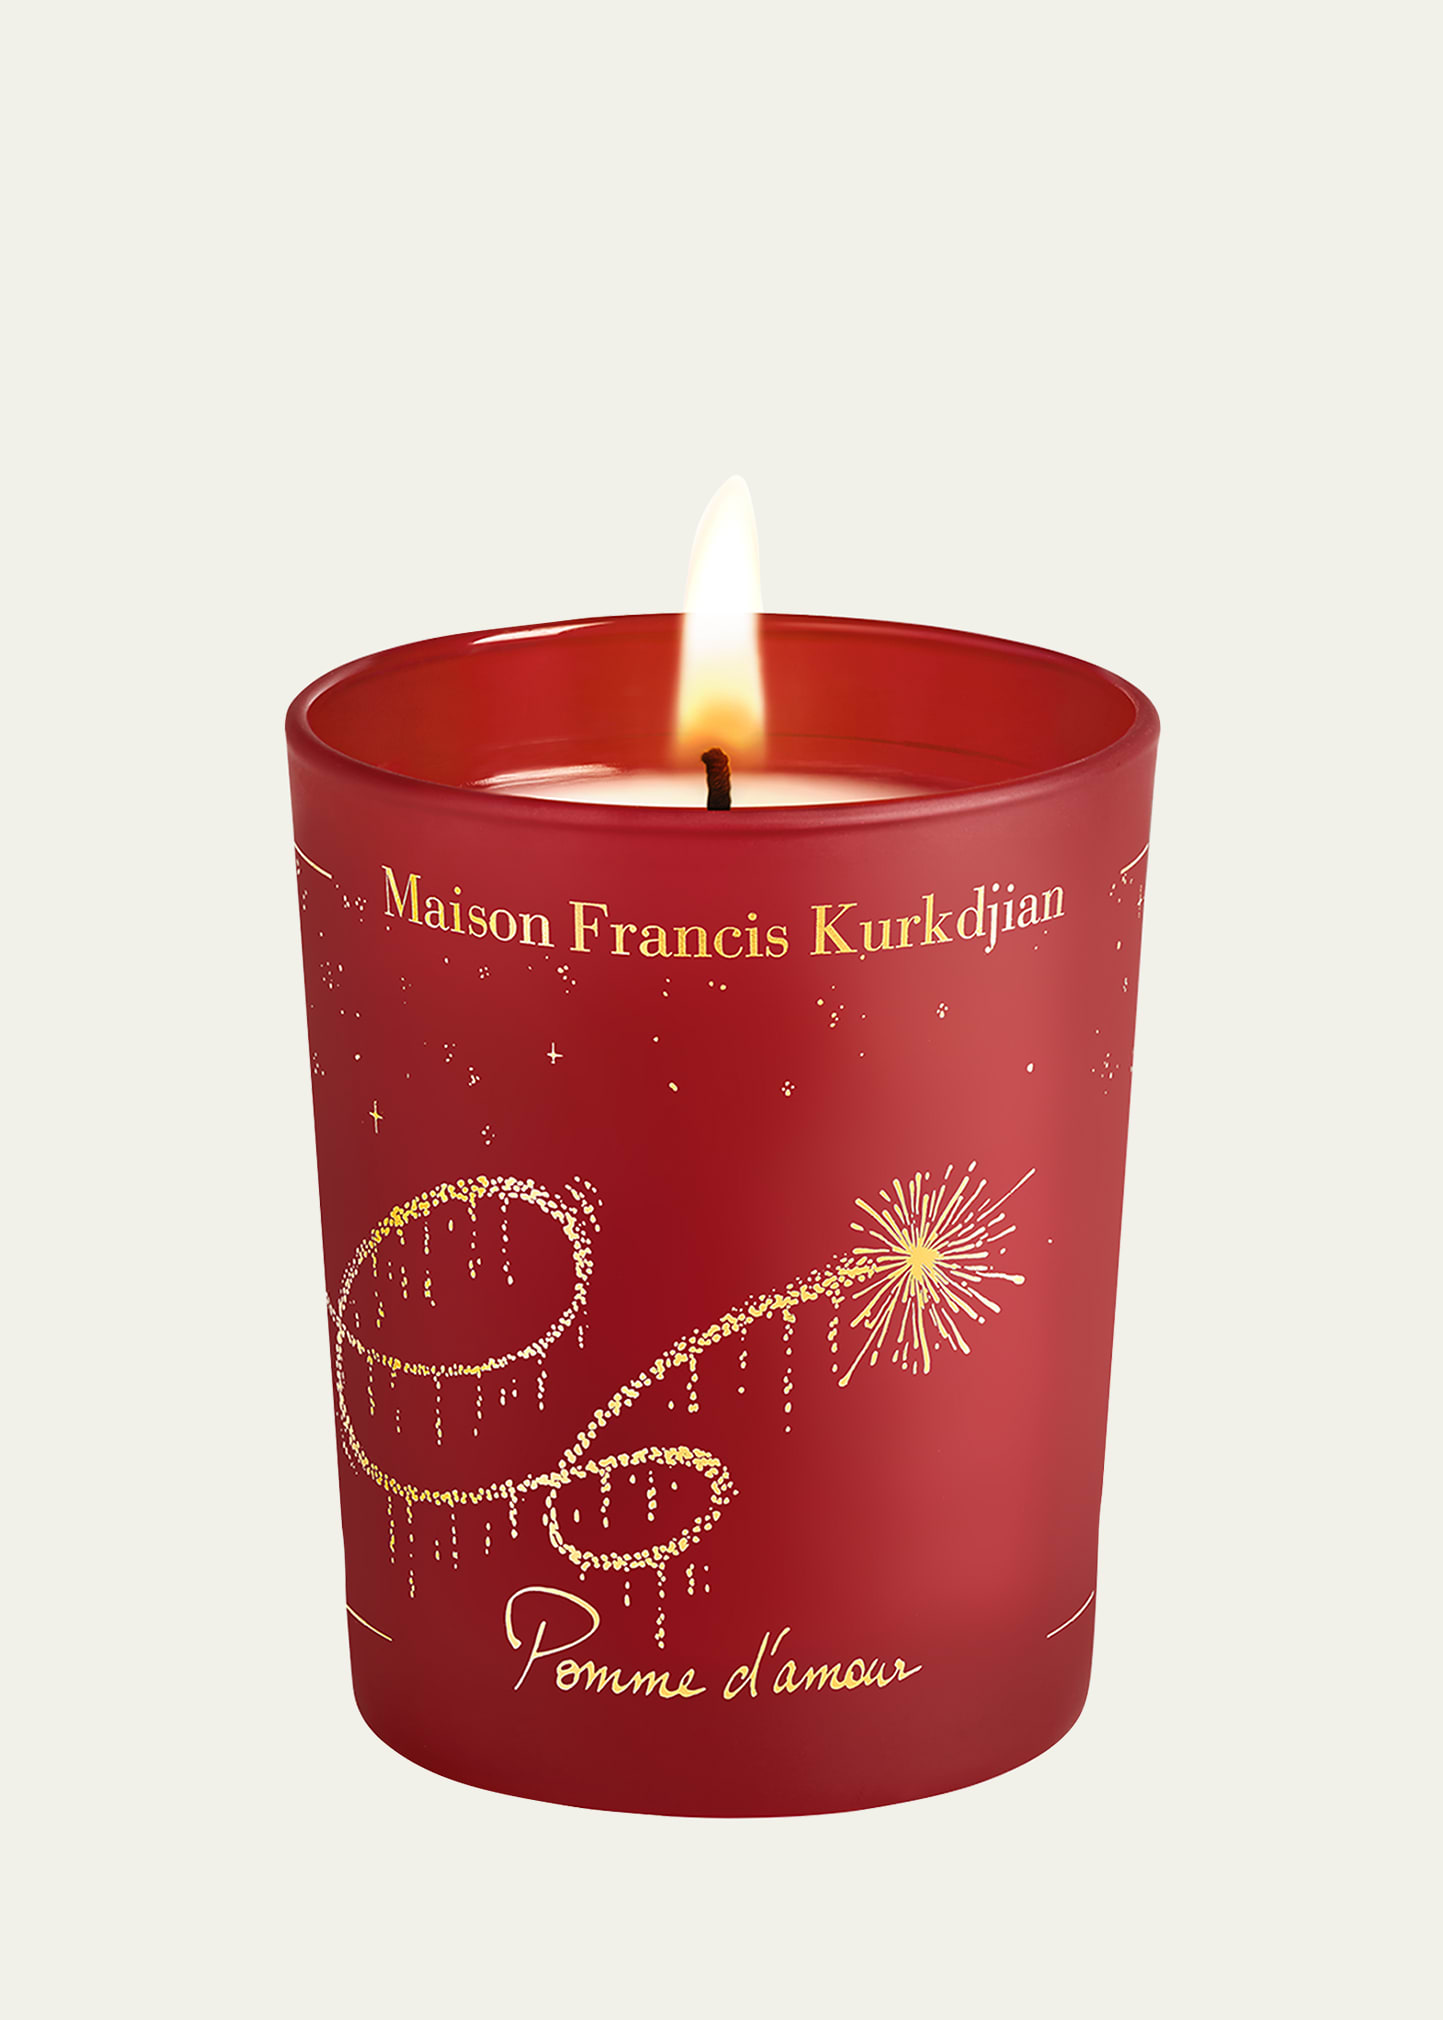 Maison Francis Kurkdjian Pomme d'Amour Candle, 6.3 oz.